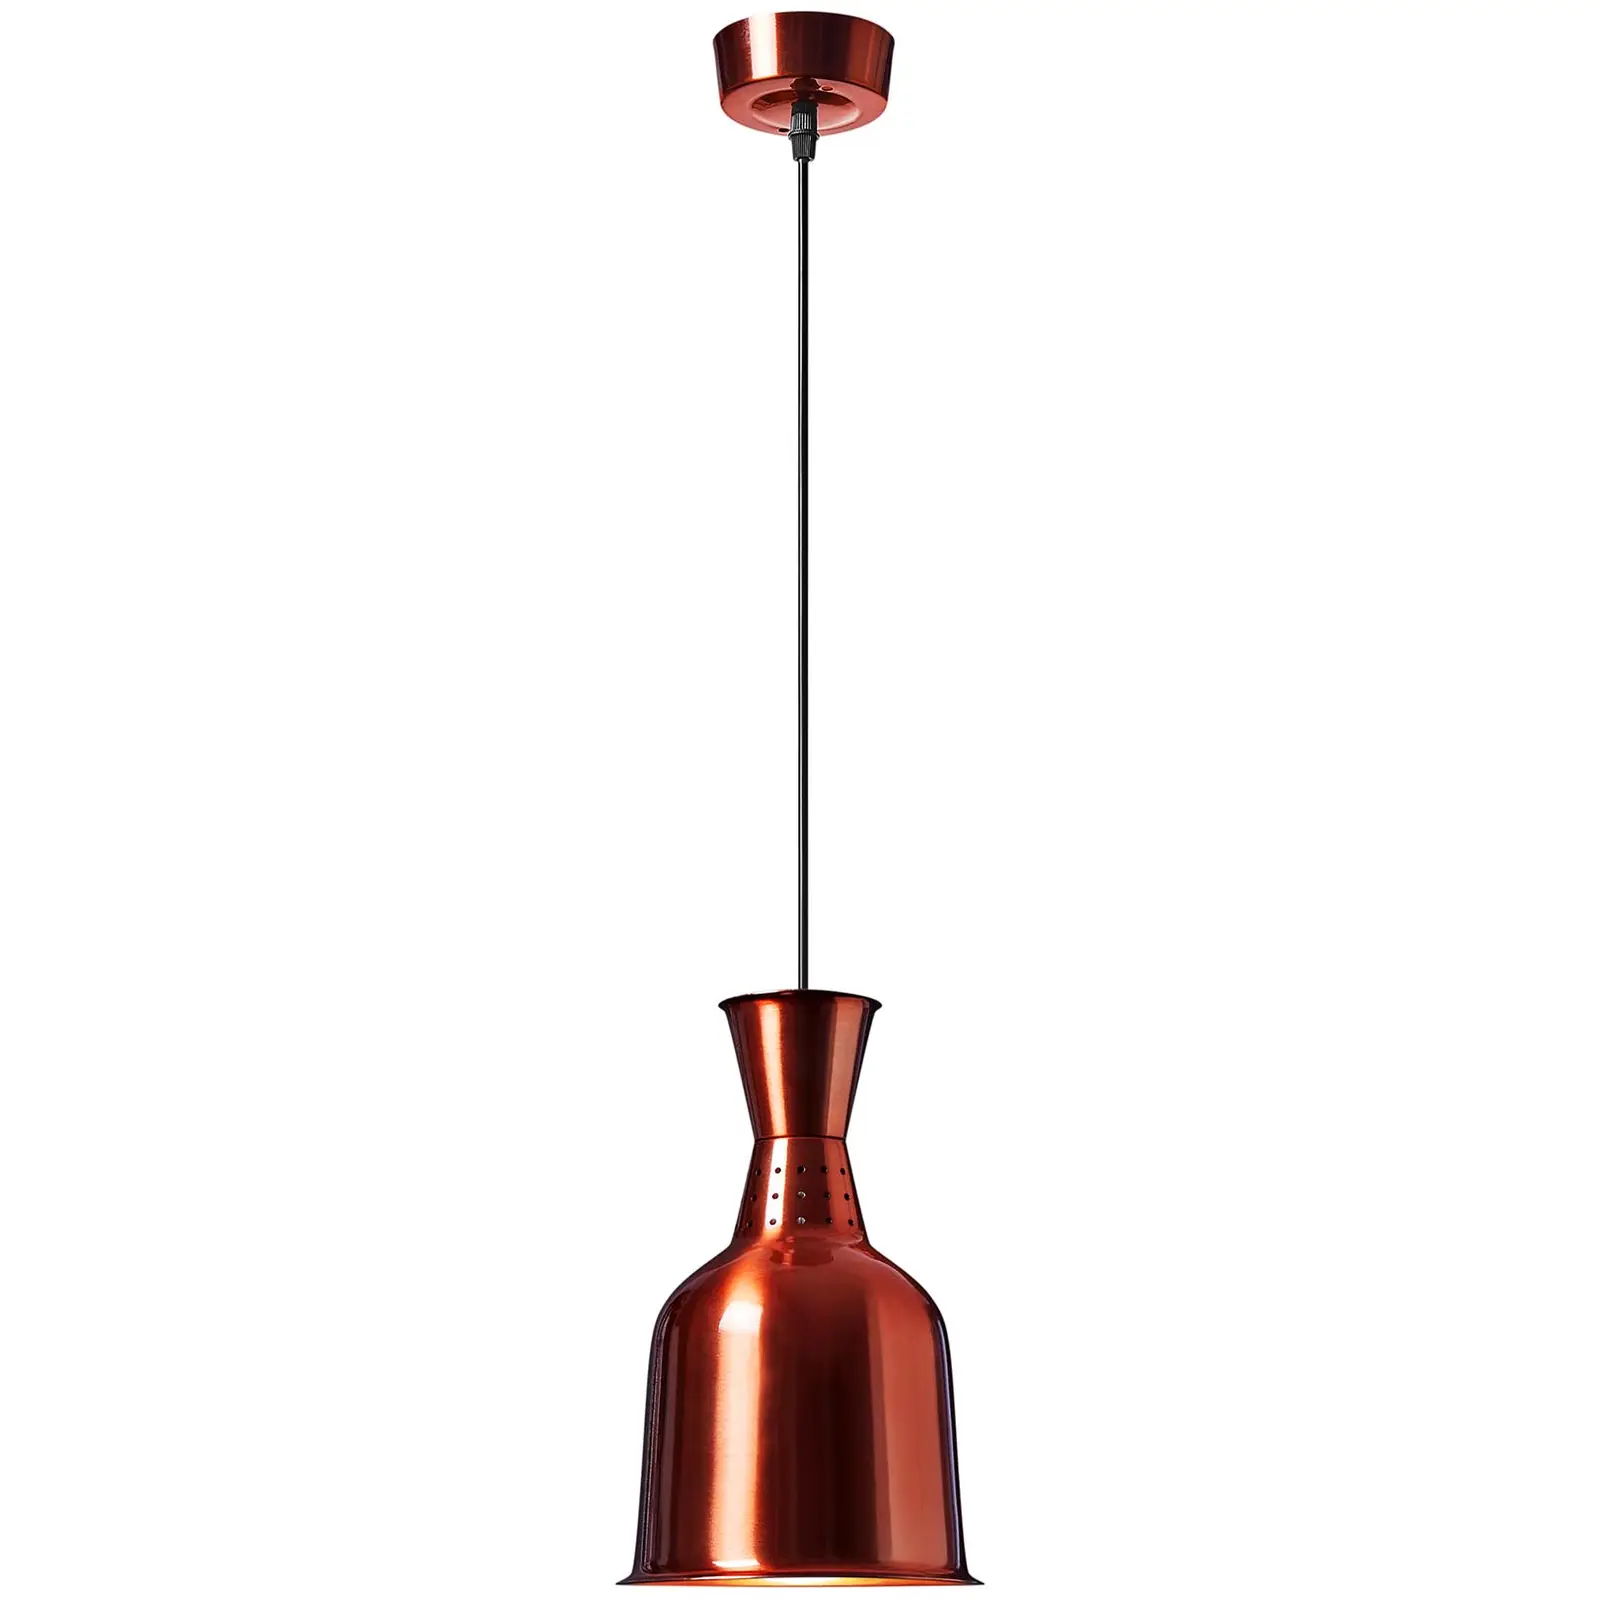 Lampe chauffante - Laiton - 19 x 19 x 29 cm - Royal Catering - Acier